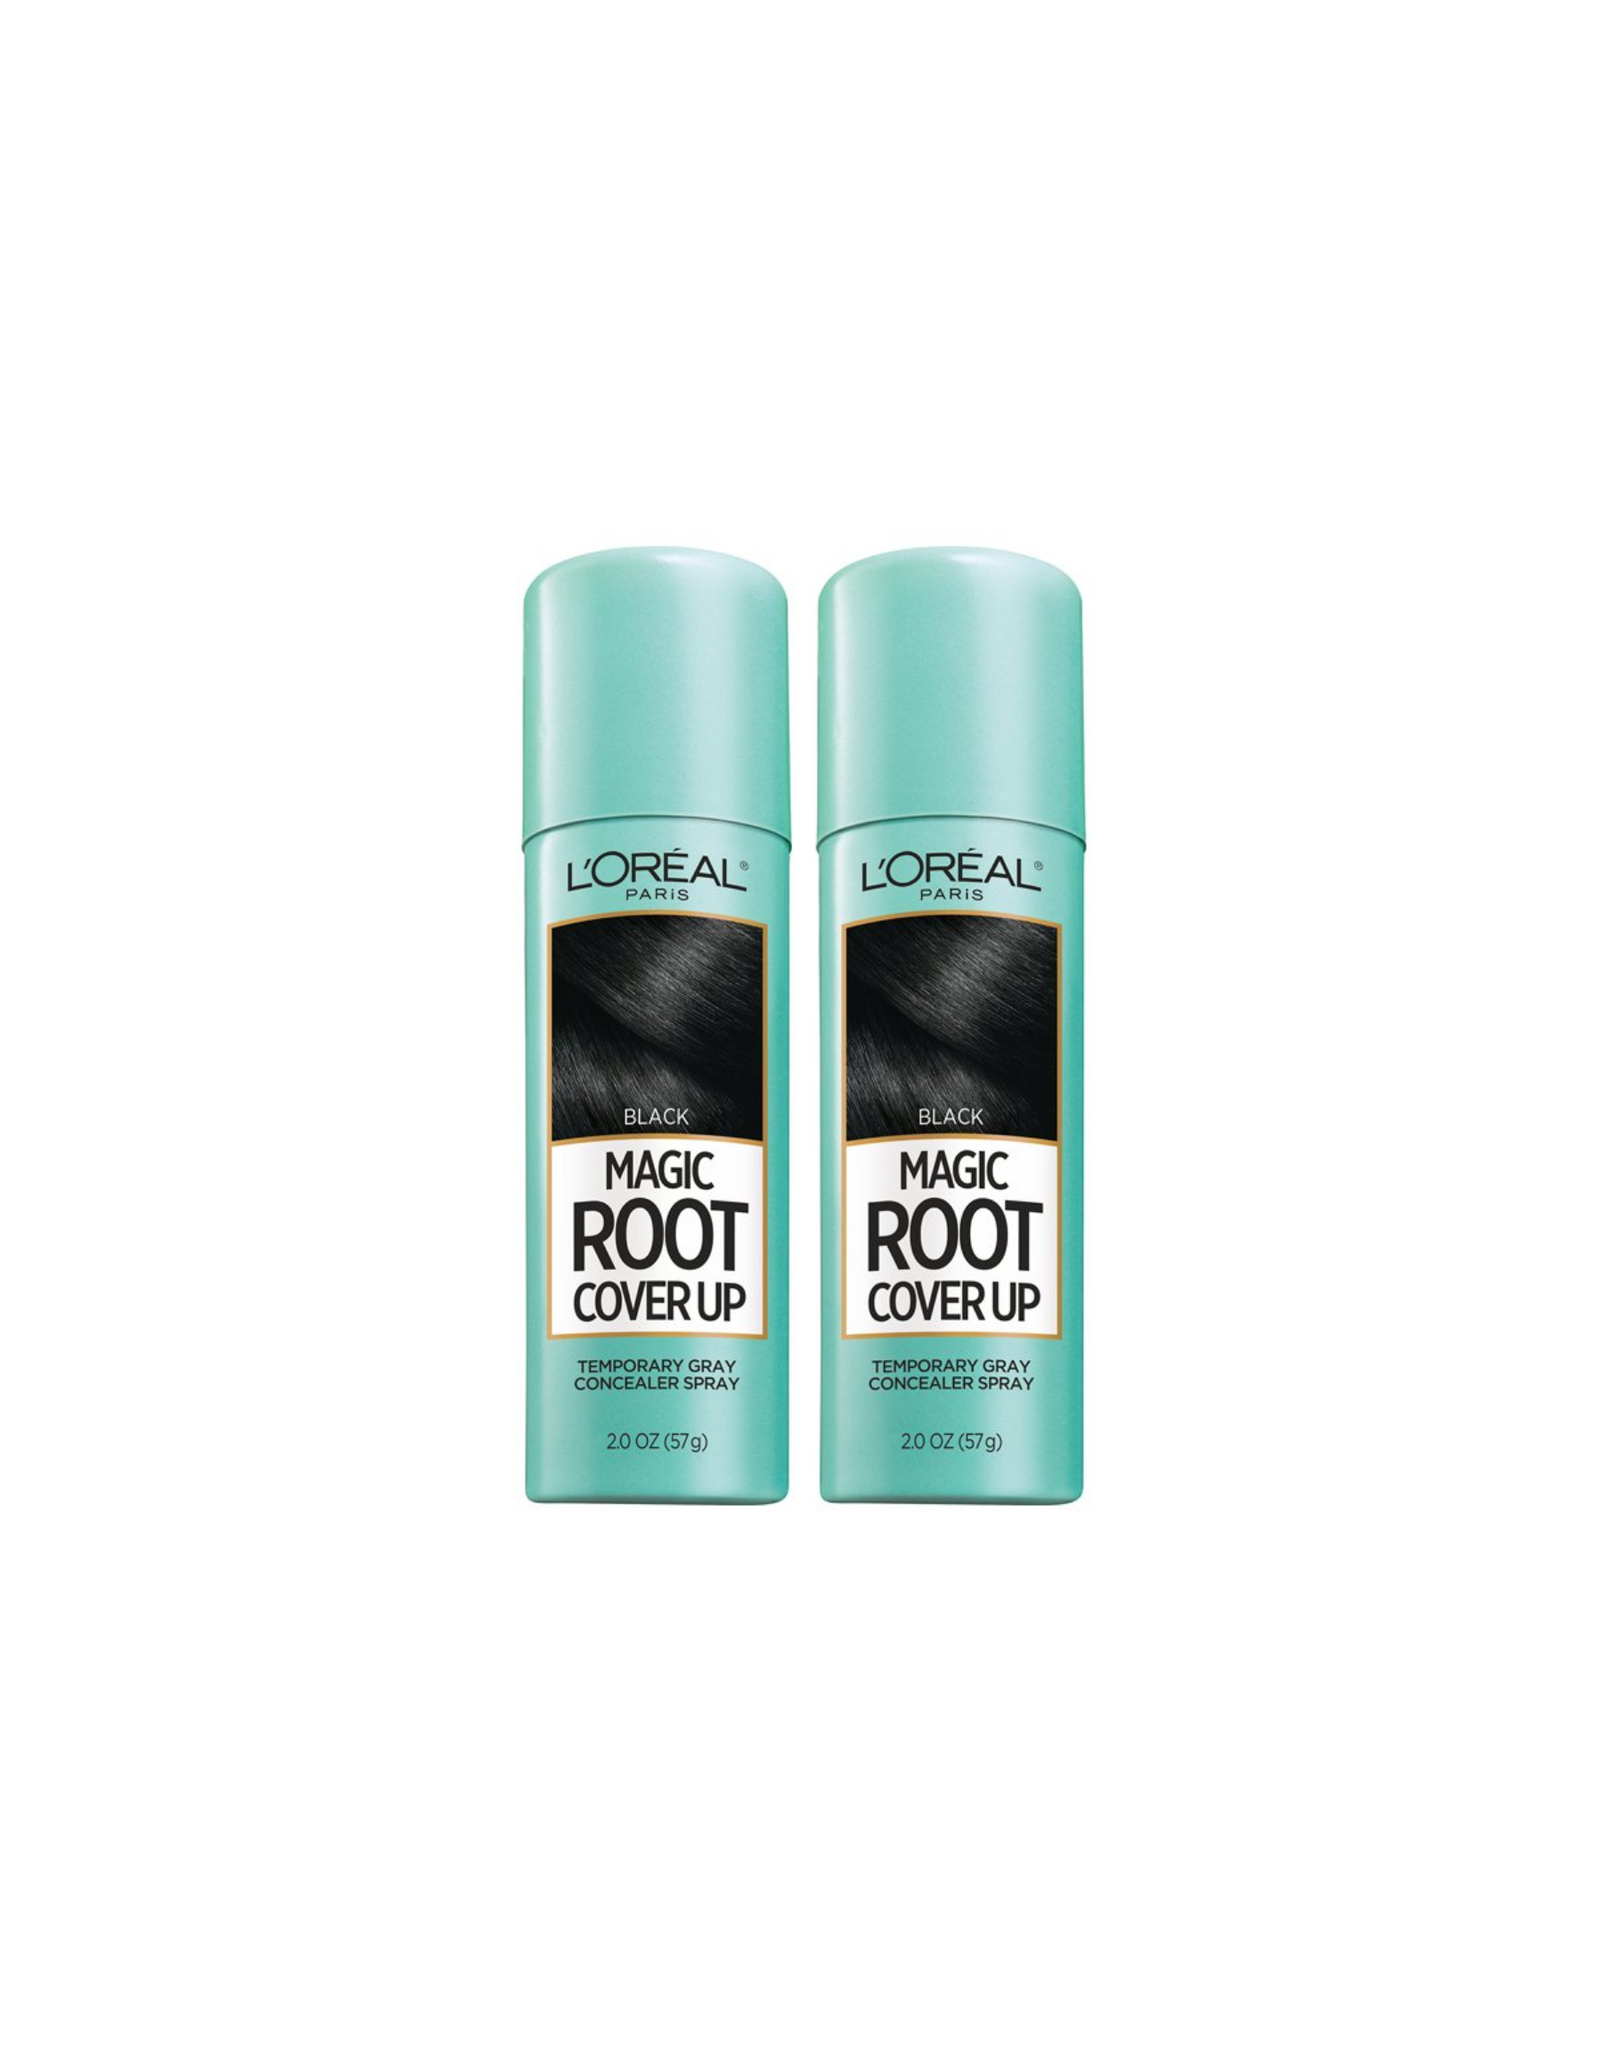 L'Oreal Paris Hair Color Root Cover Up Hair Dye, Black, 2 oz (Pack of 2)